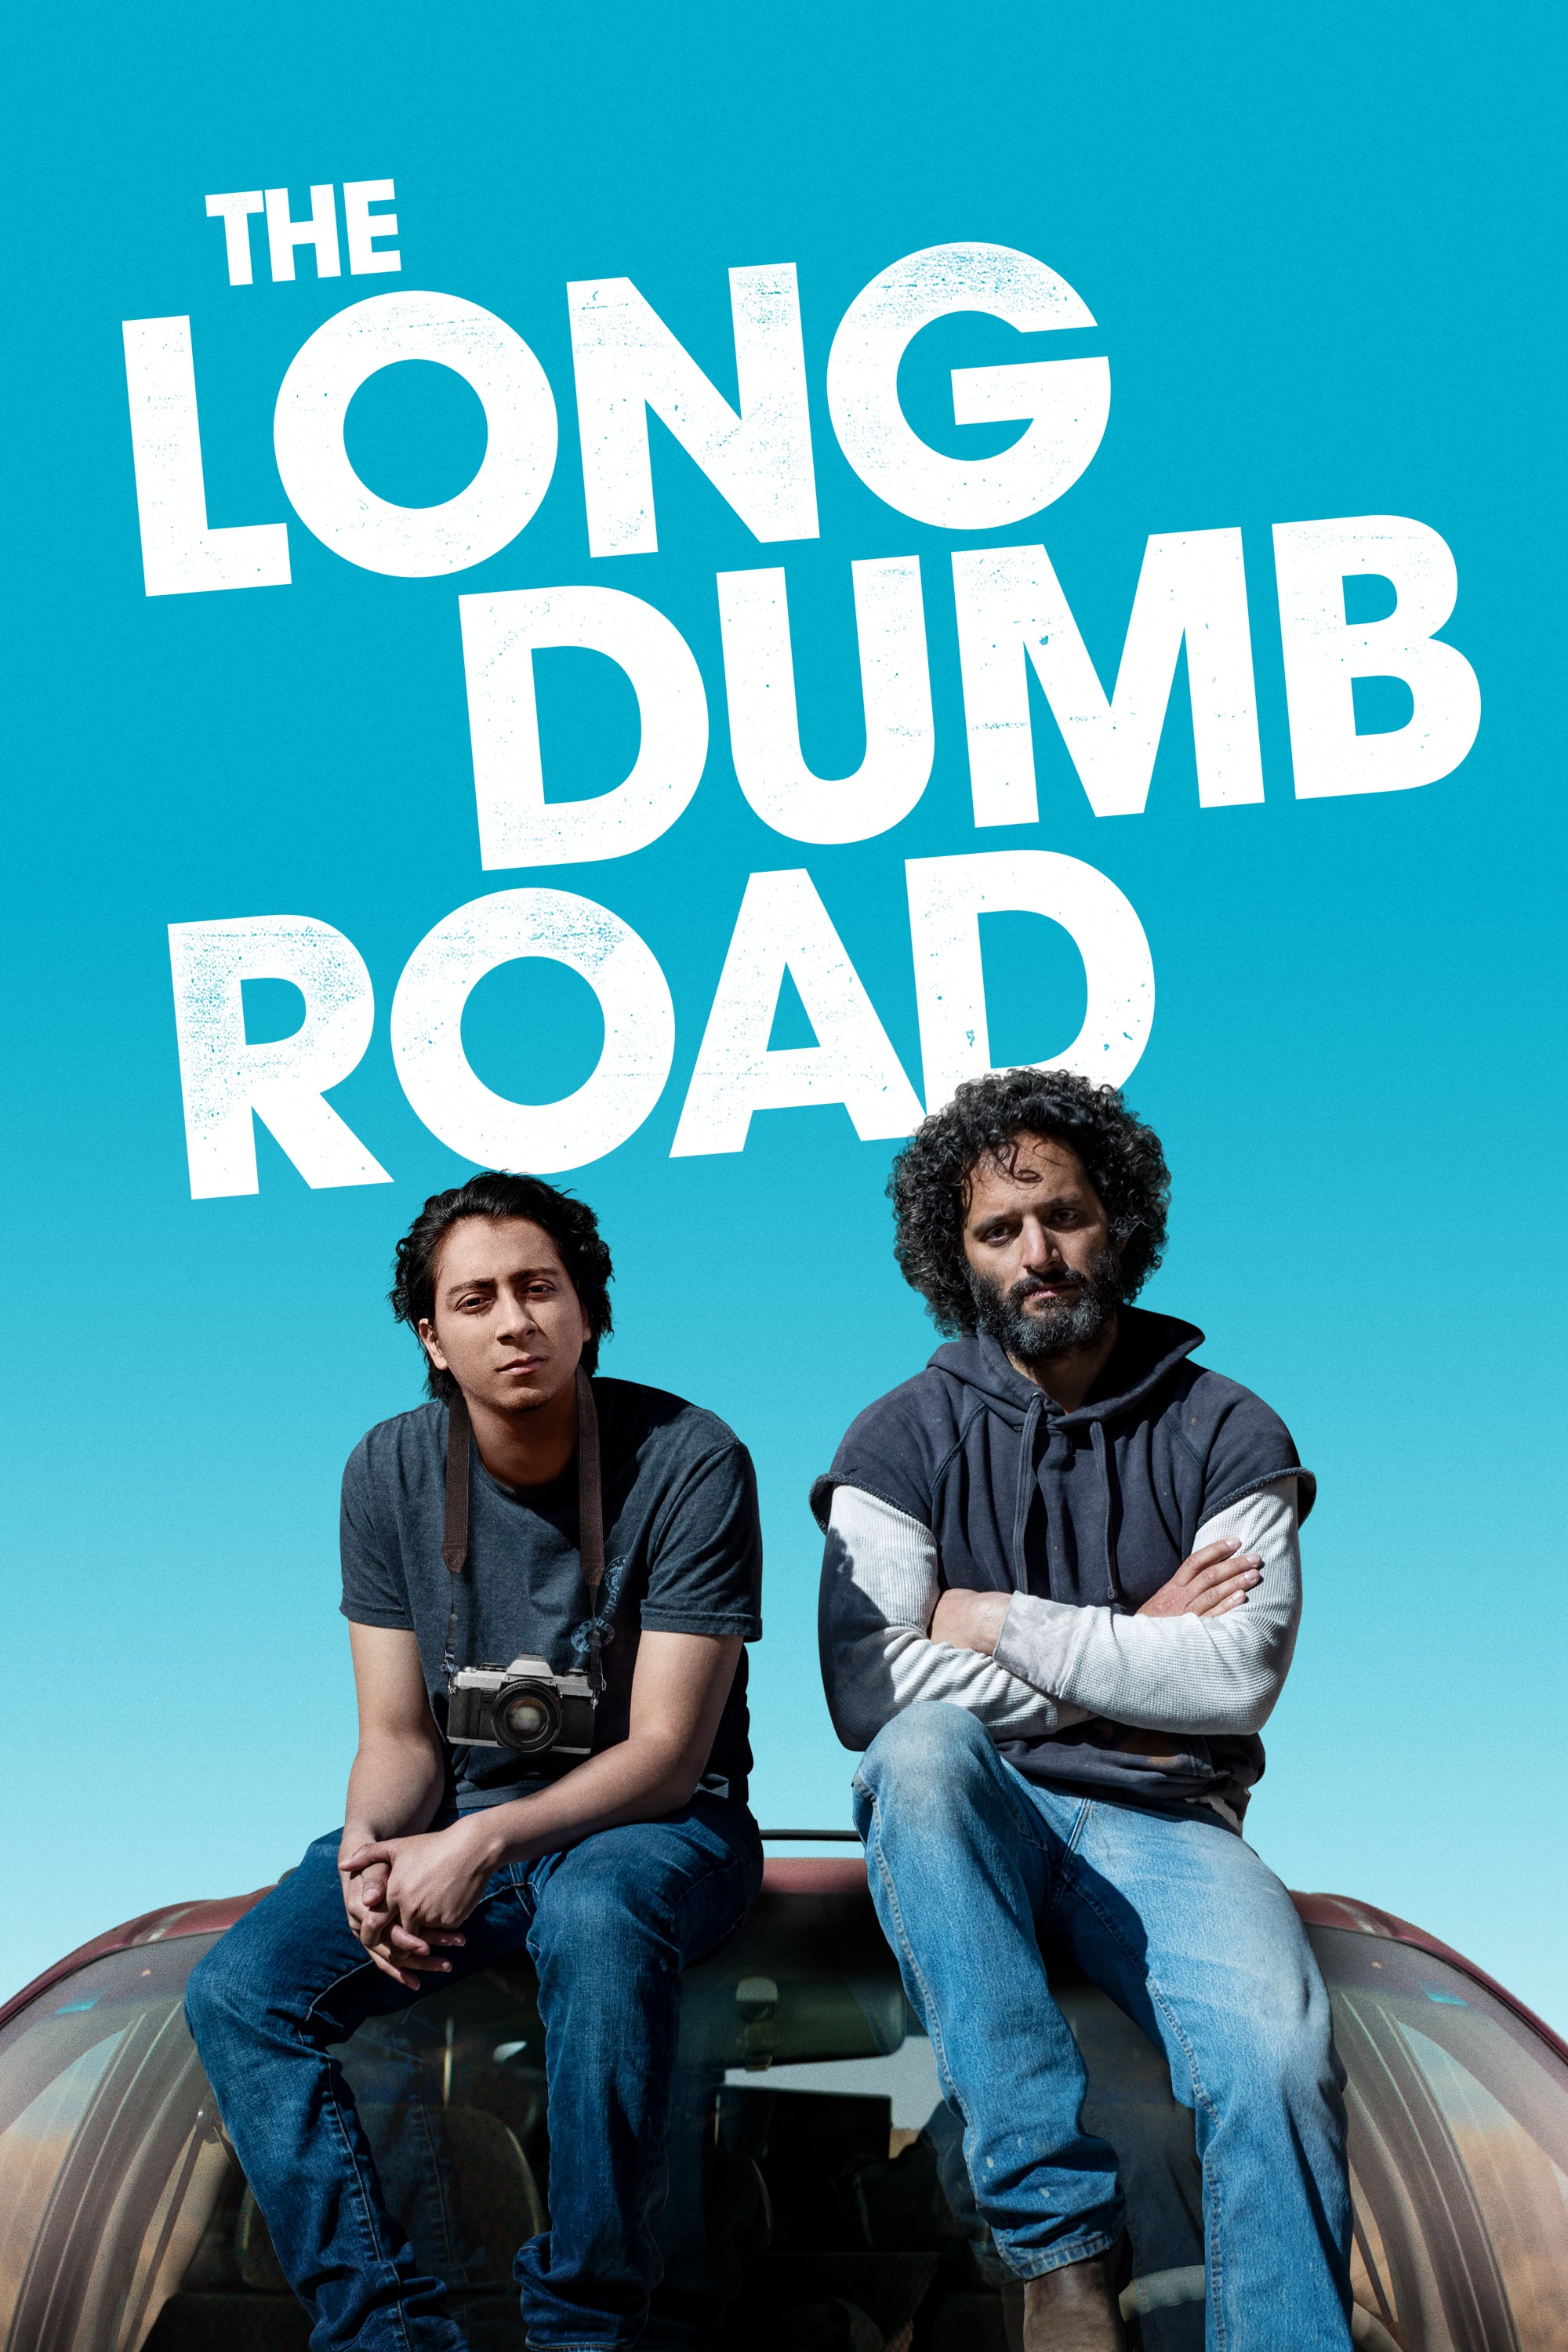 The Long Dumb Road